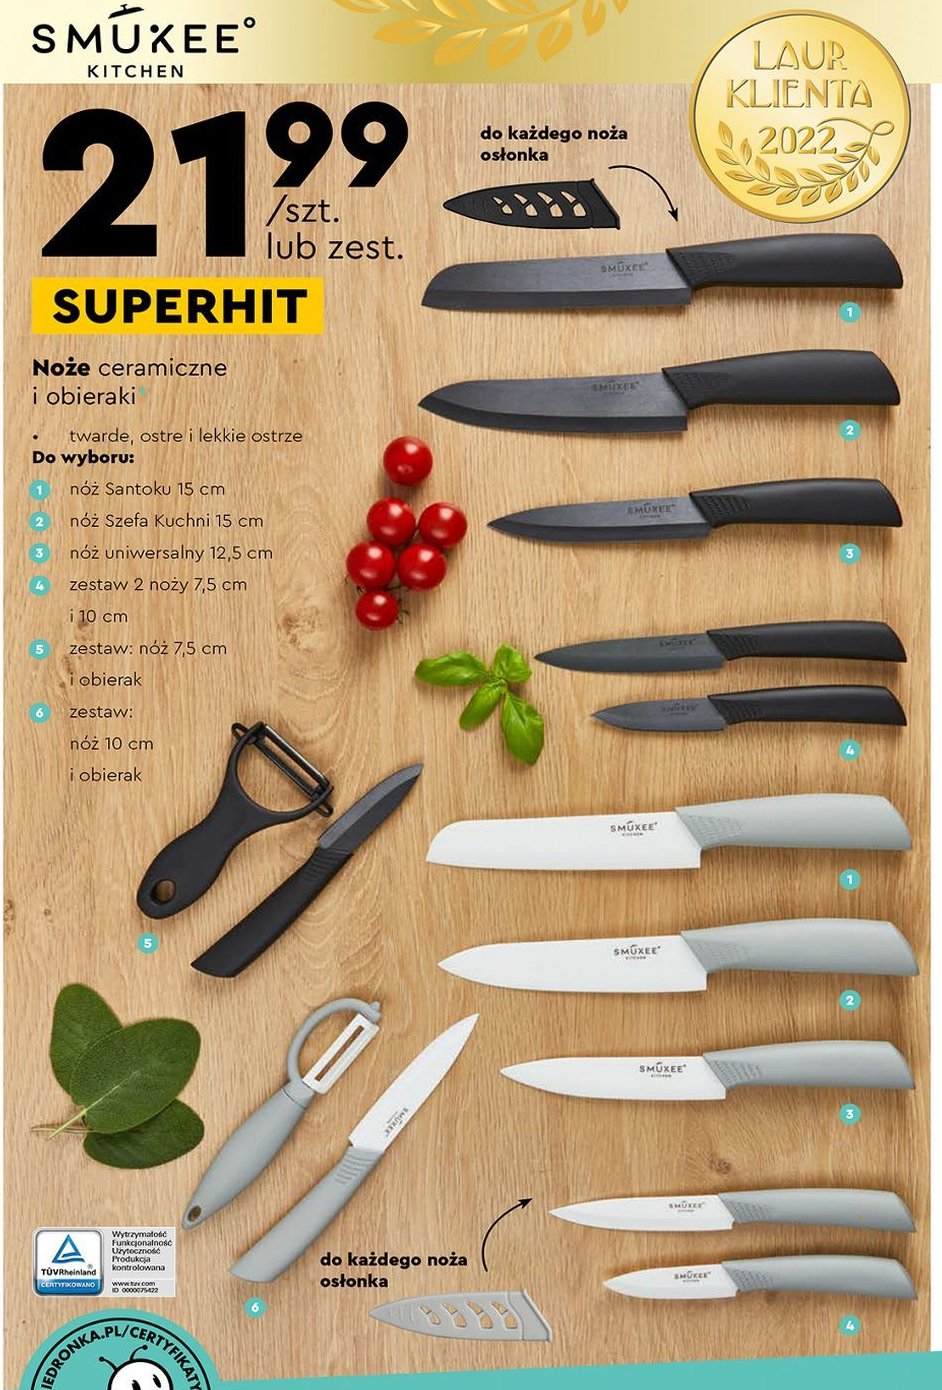 Zestaw noży 7.5 cm i 10 cm Smukee kitchen promocja